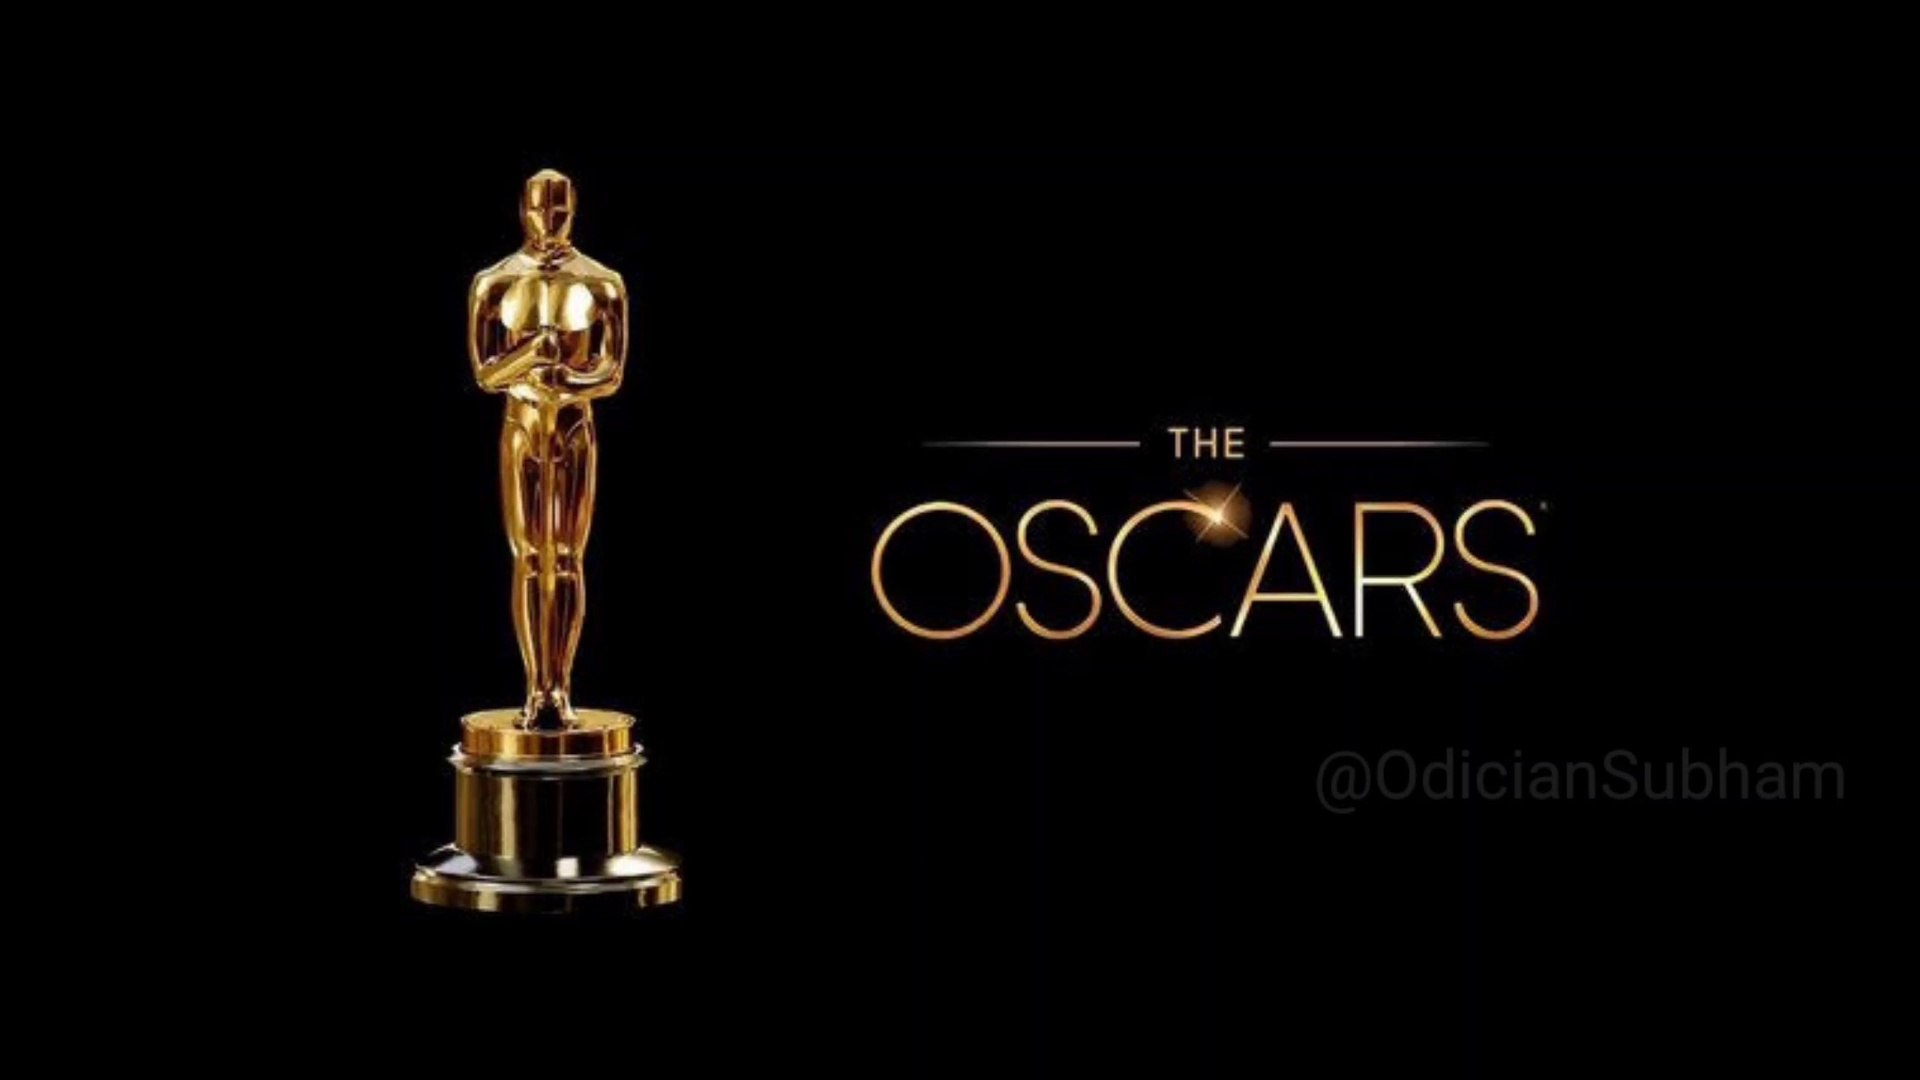 OSCARS Award 2023 | Oscars Award Odia Fact | Odician Subham | OSCARS Award 2023 | History of Academy